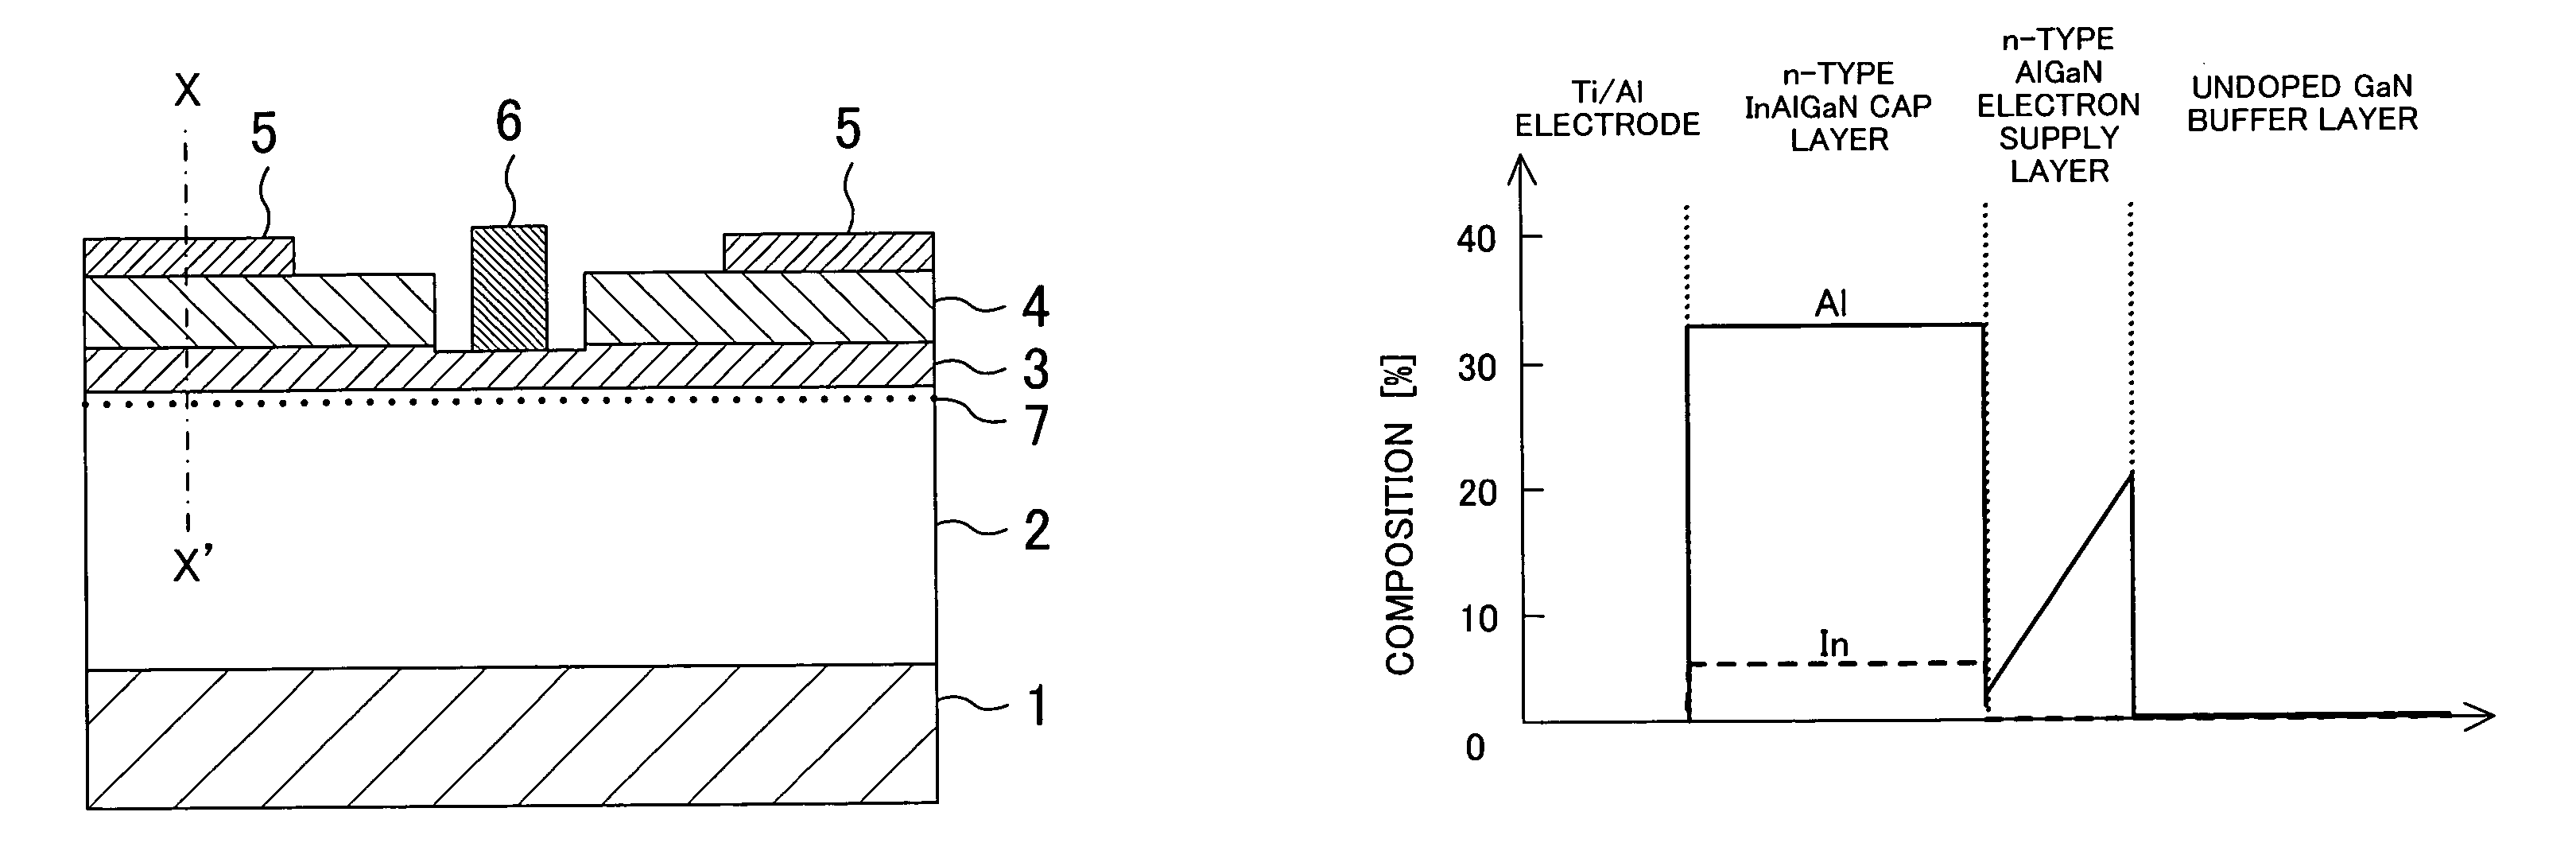 Field effect transistor having nitride semiconductor layer